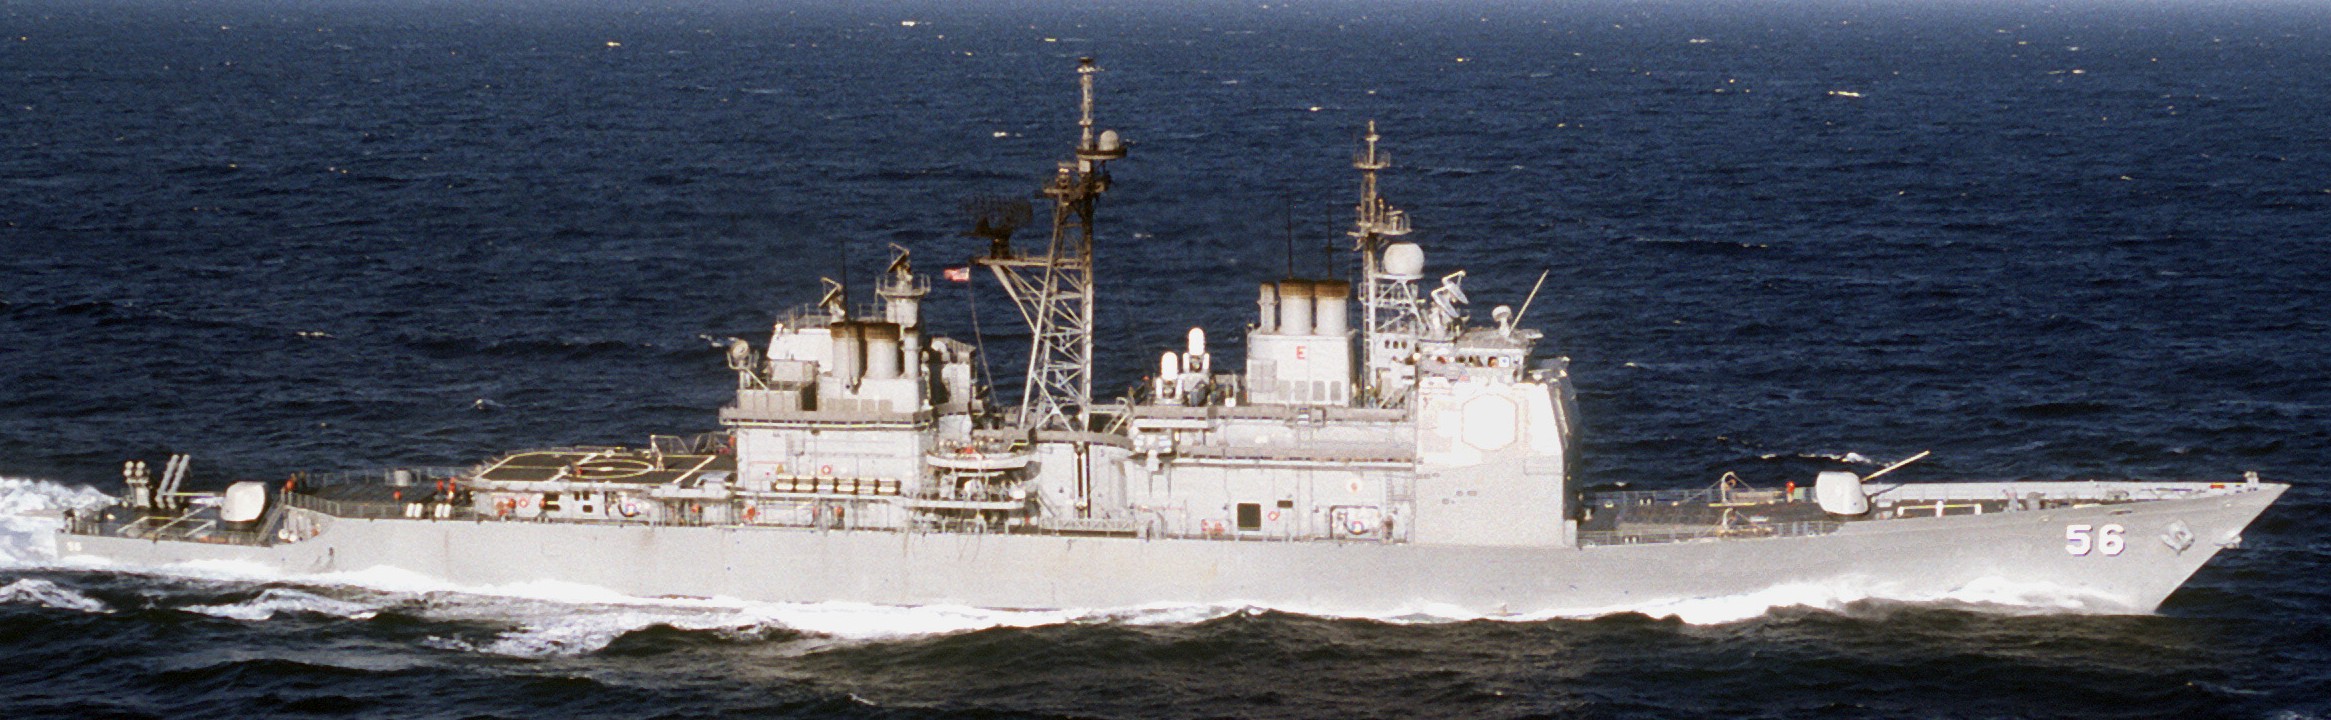 cg-56 uss san jacinto ticonderoga class guided missile cruiser aegis us navy operation desert storm 1991 150